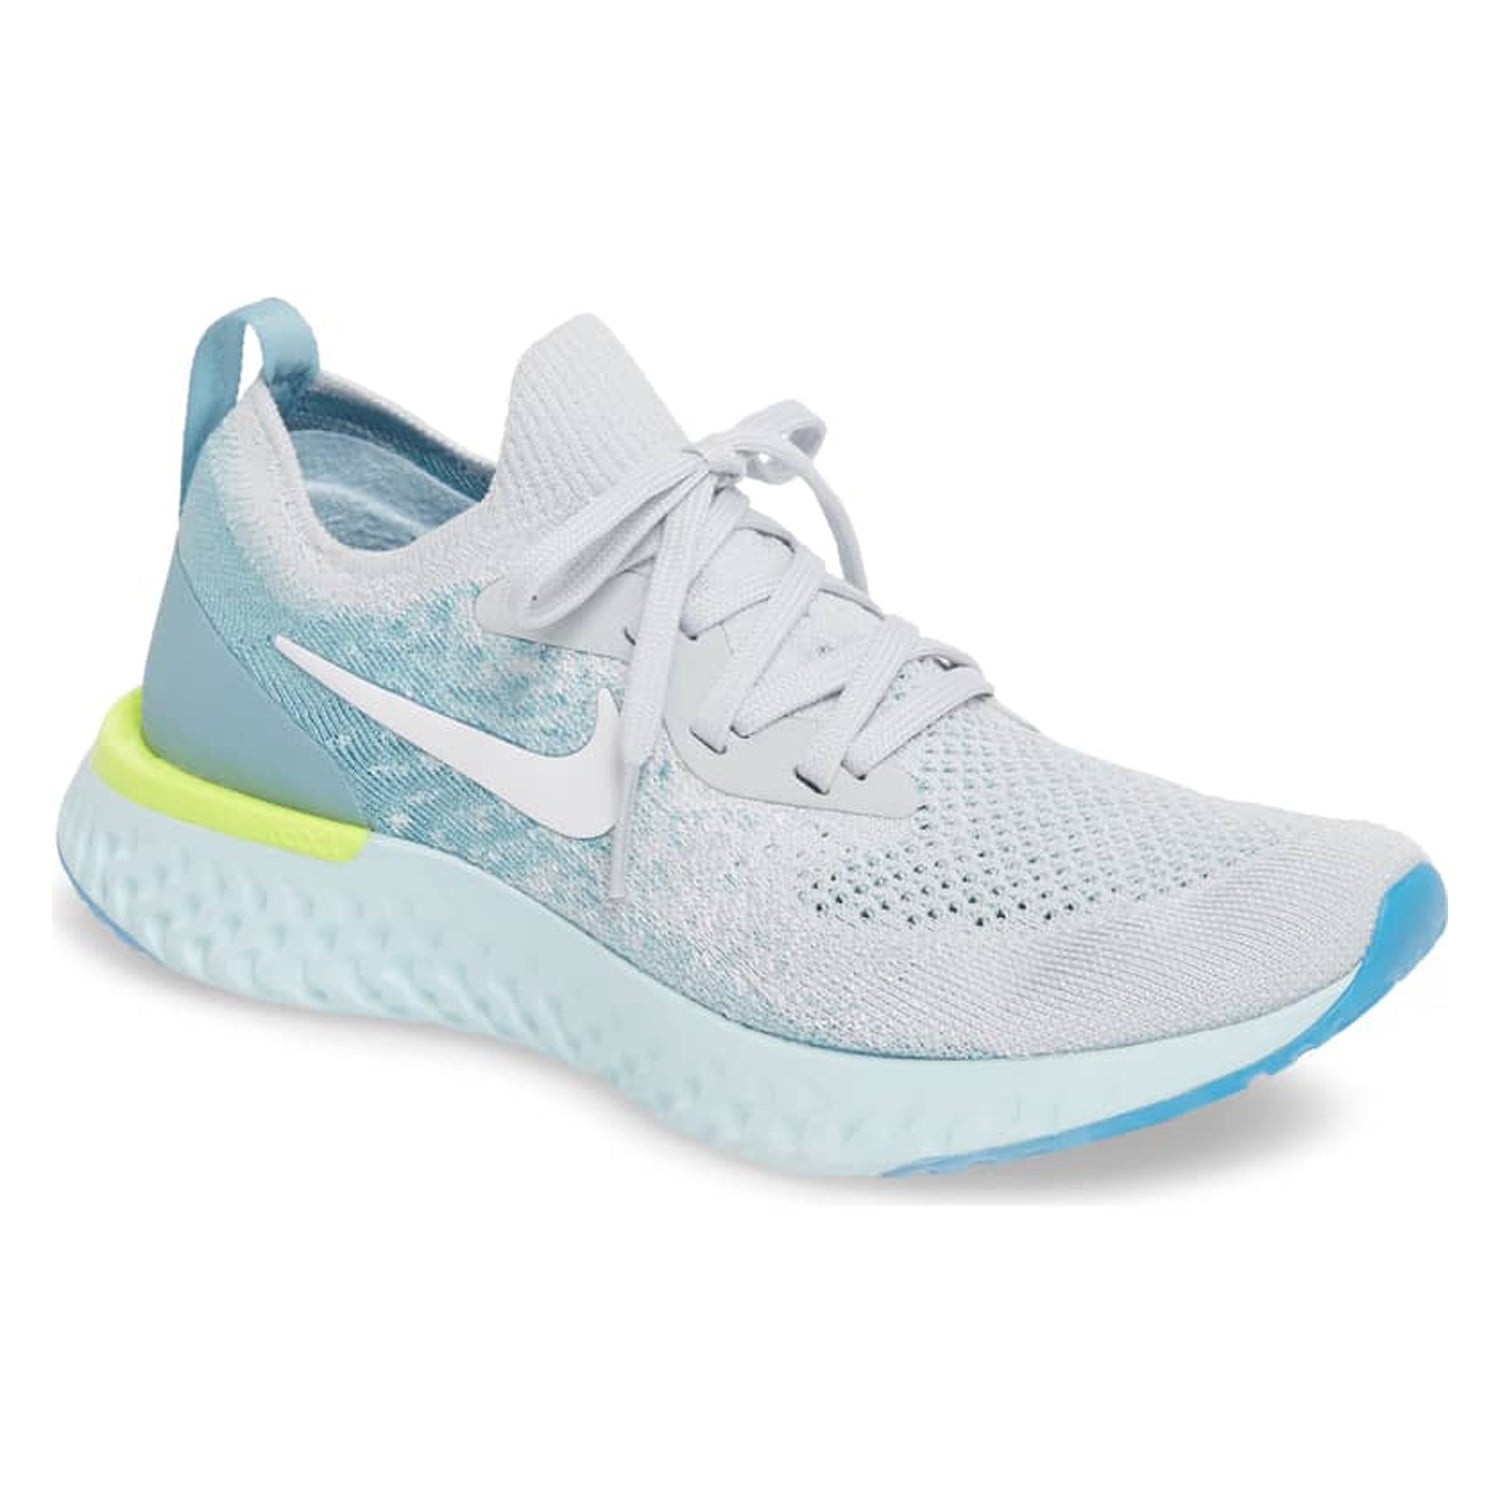 Nike Running Shoes Light Blue